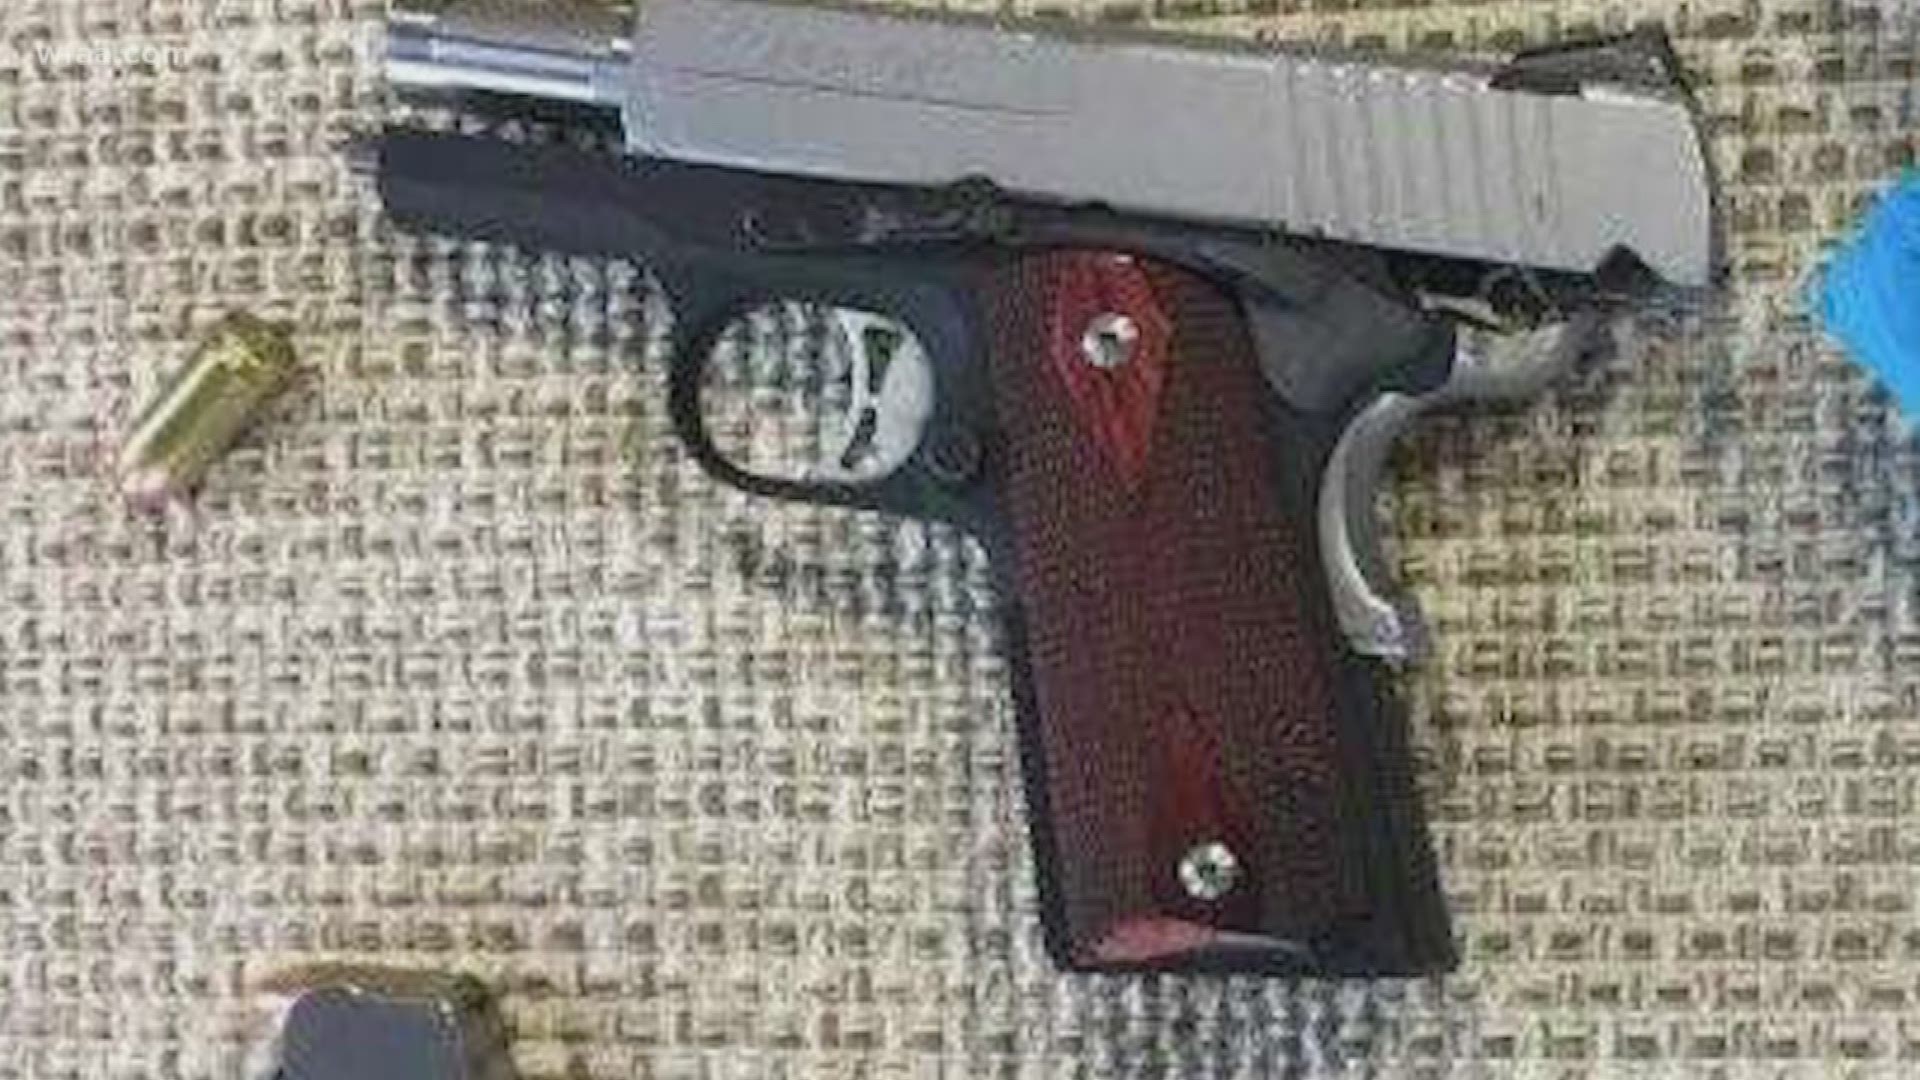 Loaded gun found steps away from school